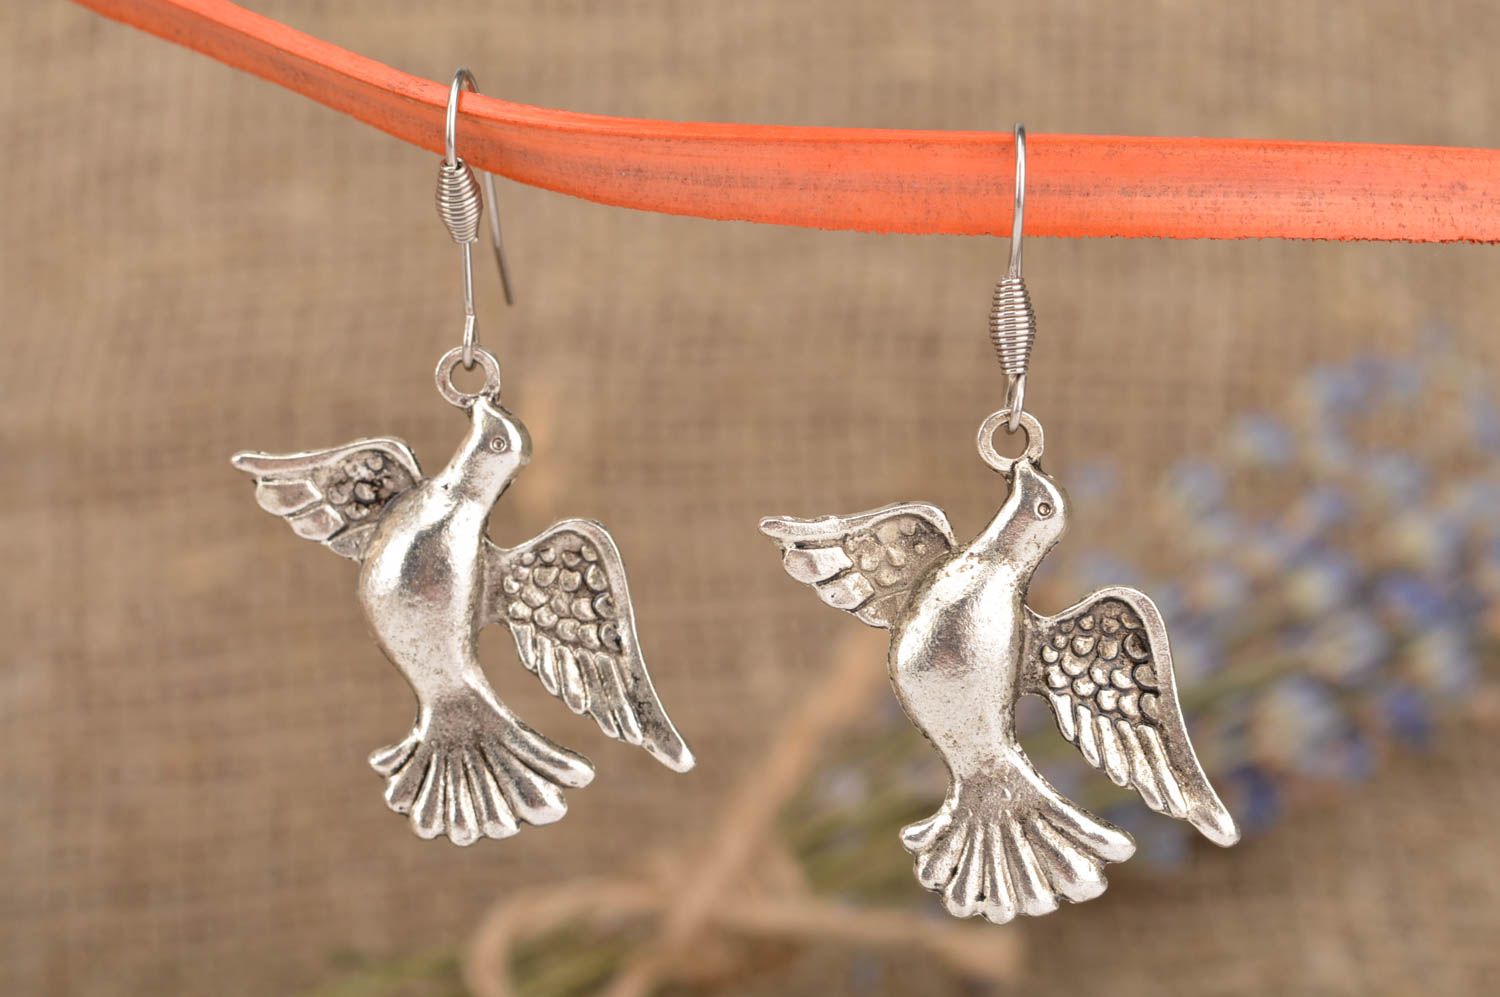 Beautiful handmade metal earrings stylish earrings for girls gifts for her photo 1